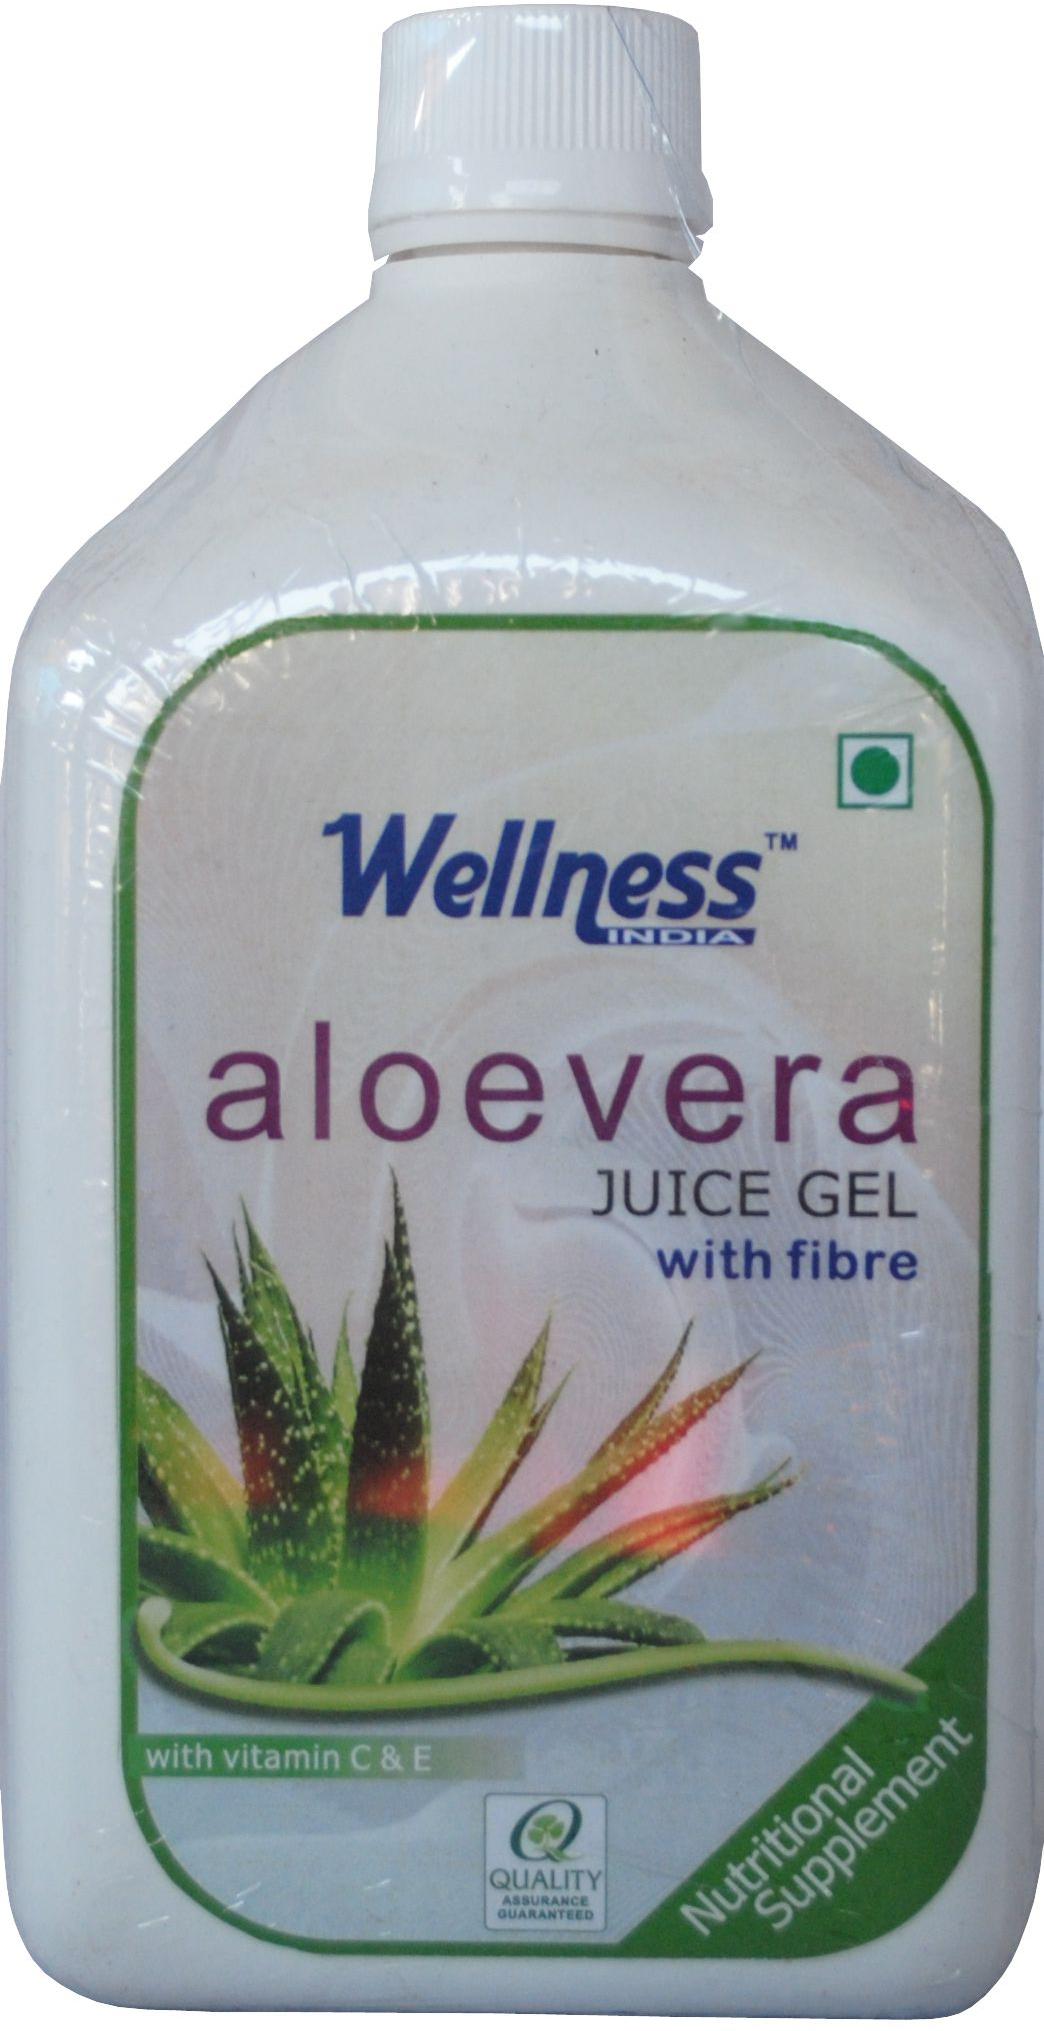 Nature Wellness Cold aloe vera juice, Packaging Type : Plastic Bottle